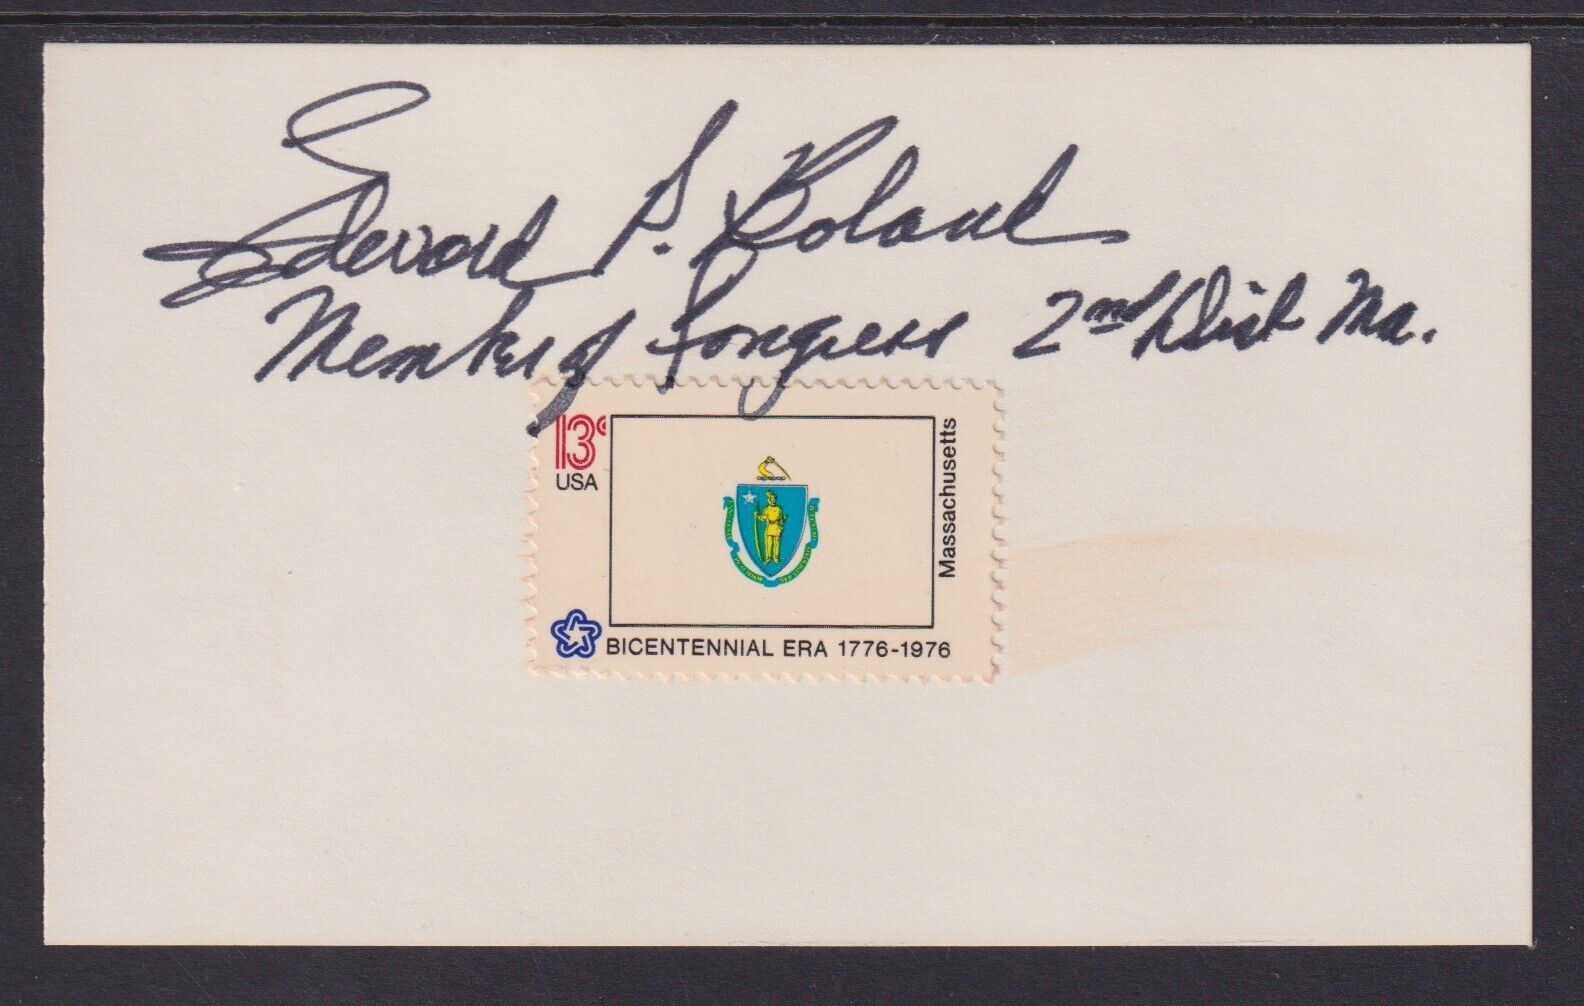 Edward P. Boland (1911-2001, US Congressman from Massachusetts, signed card